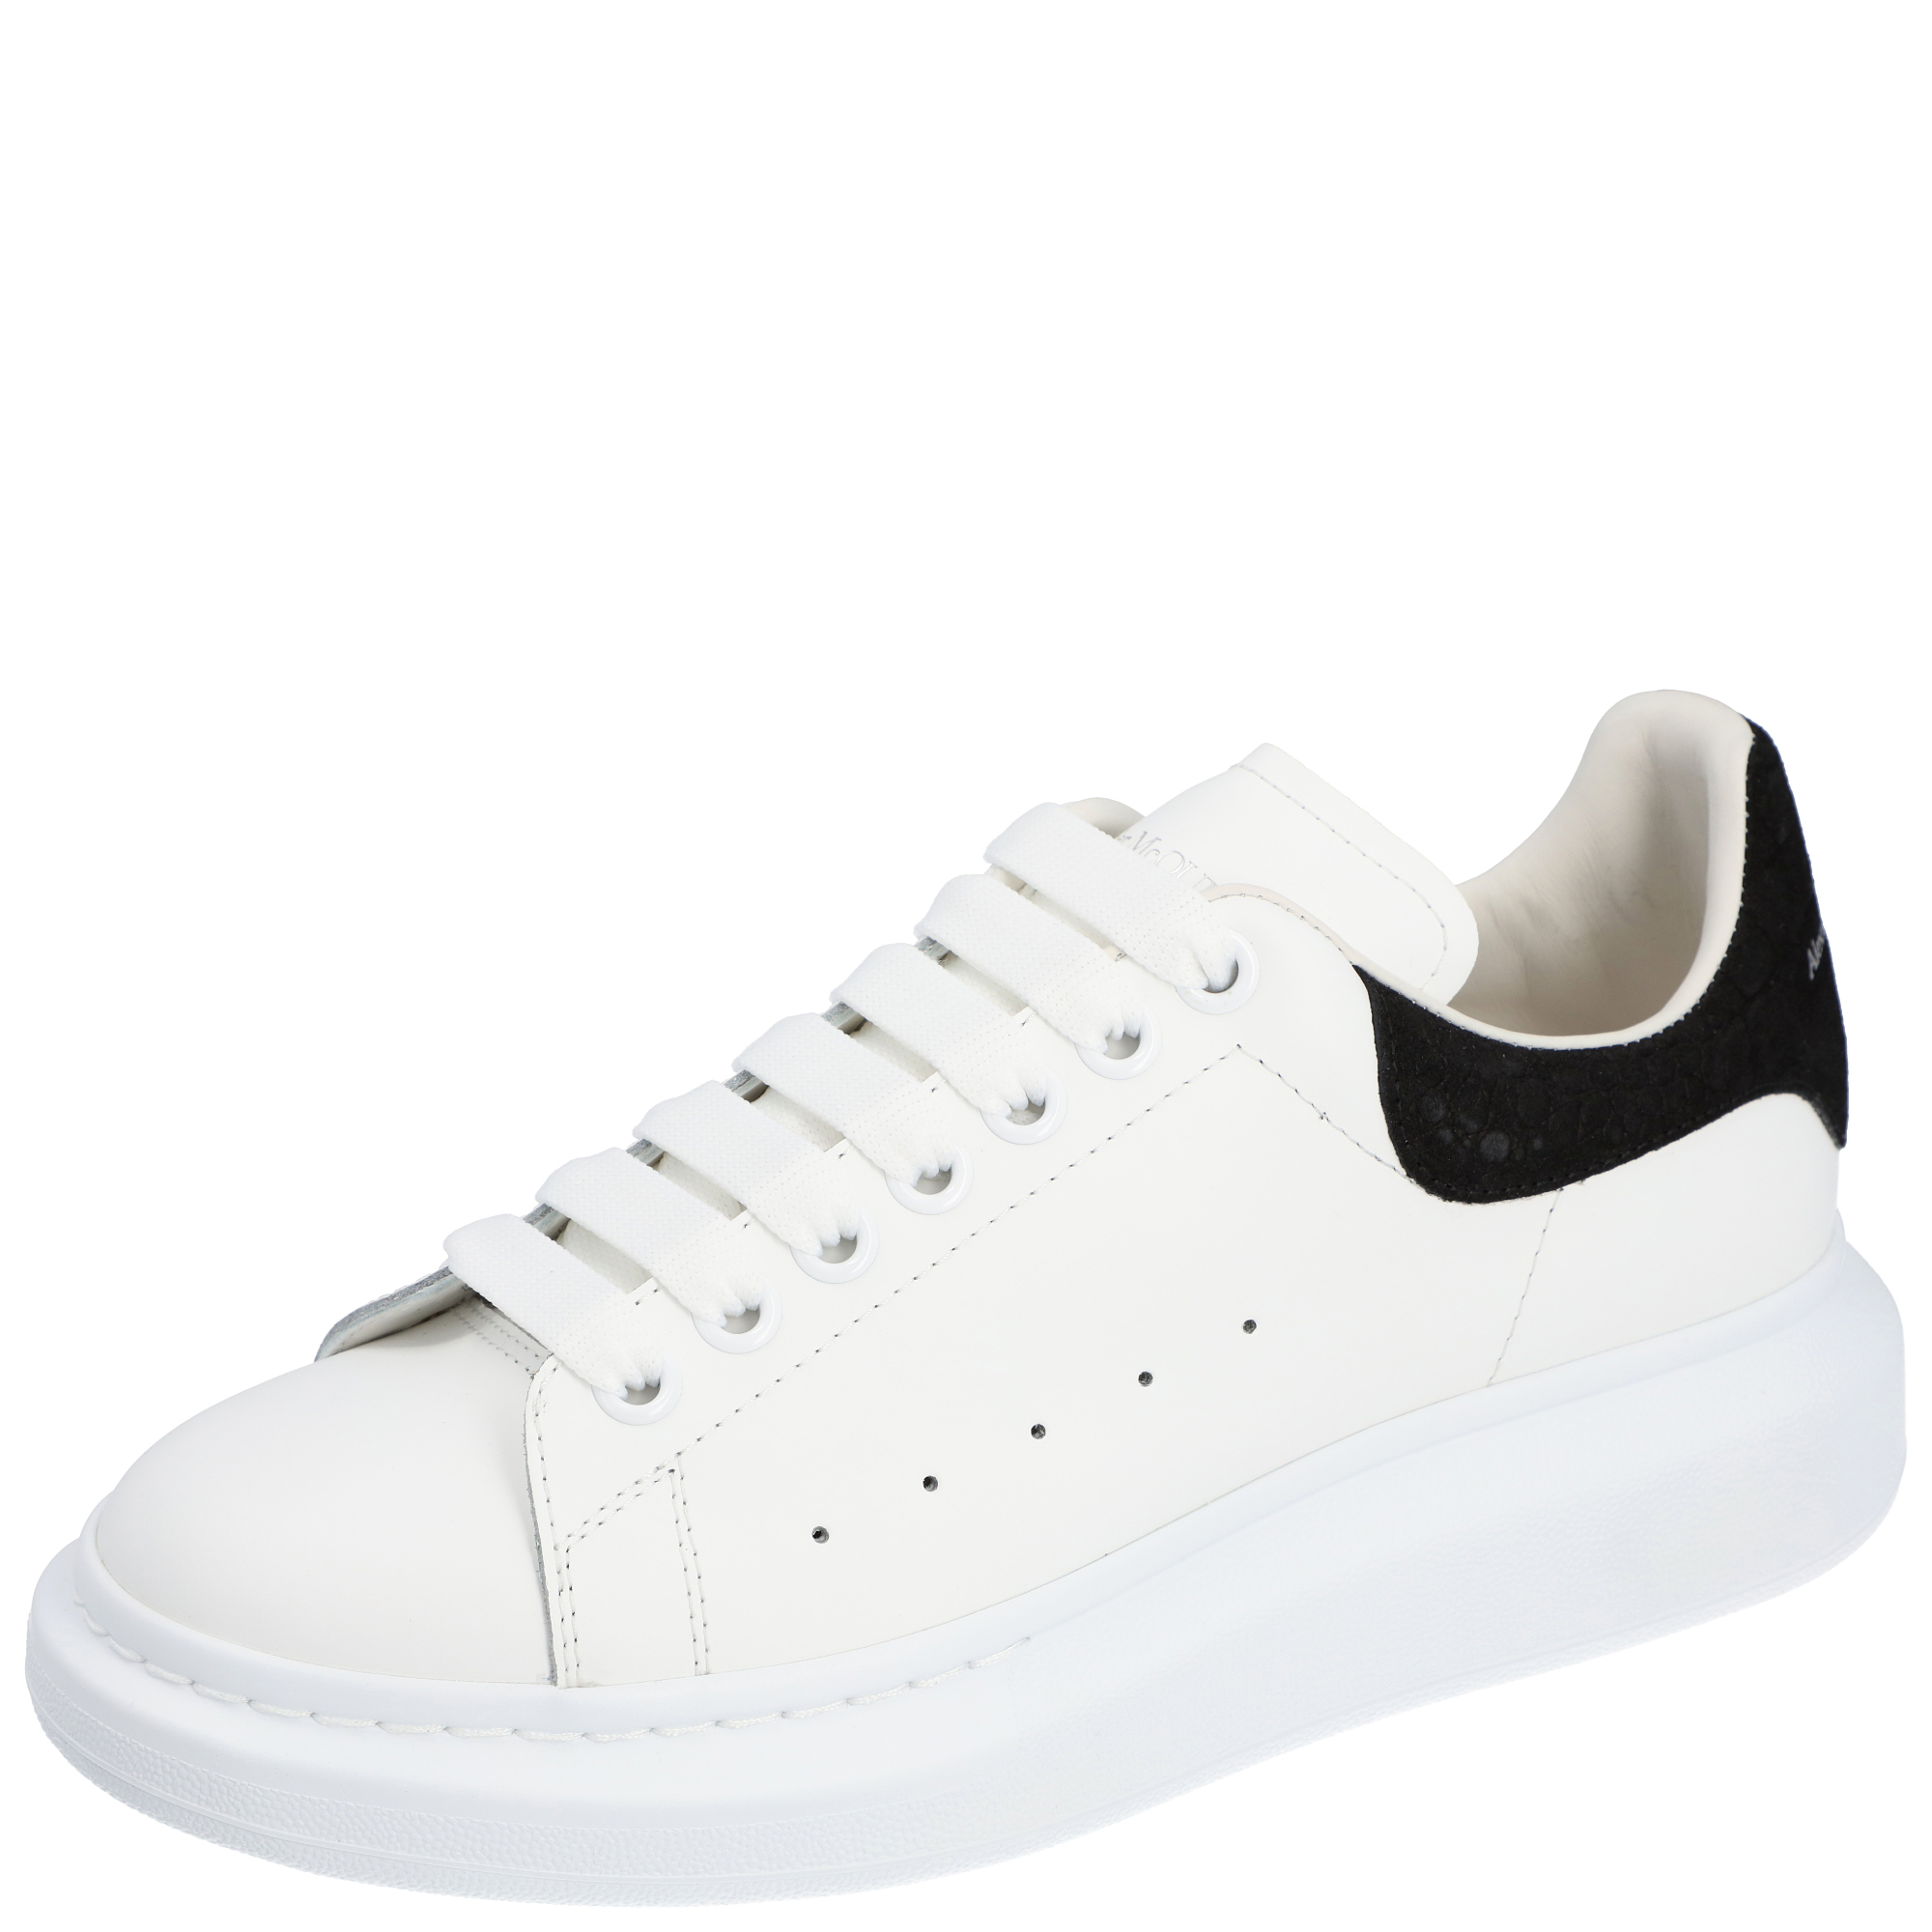 Alexander McQueen White/Black Oversized Sneakers Size EU 39,5